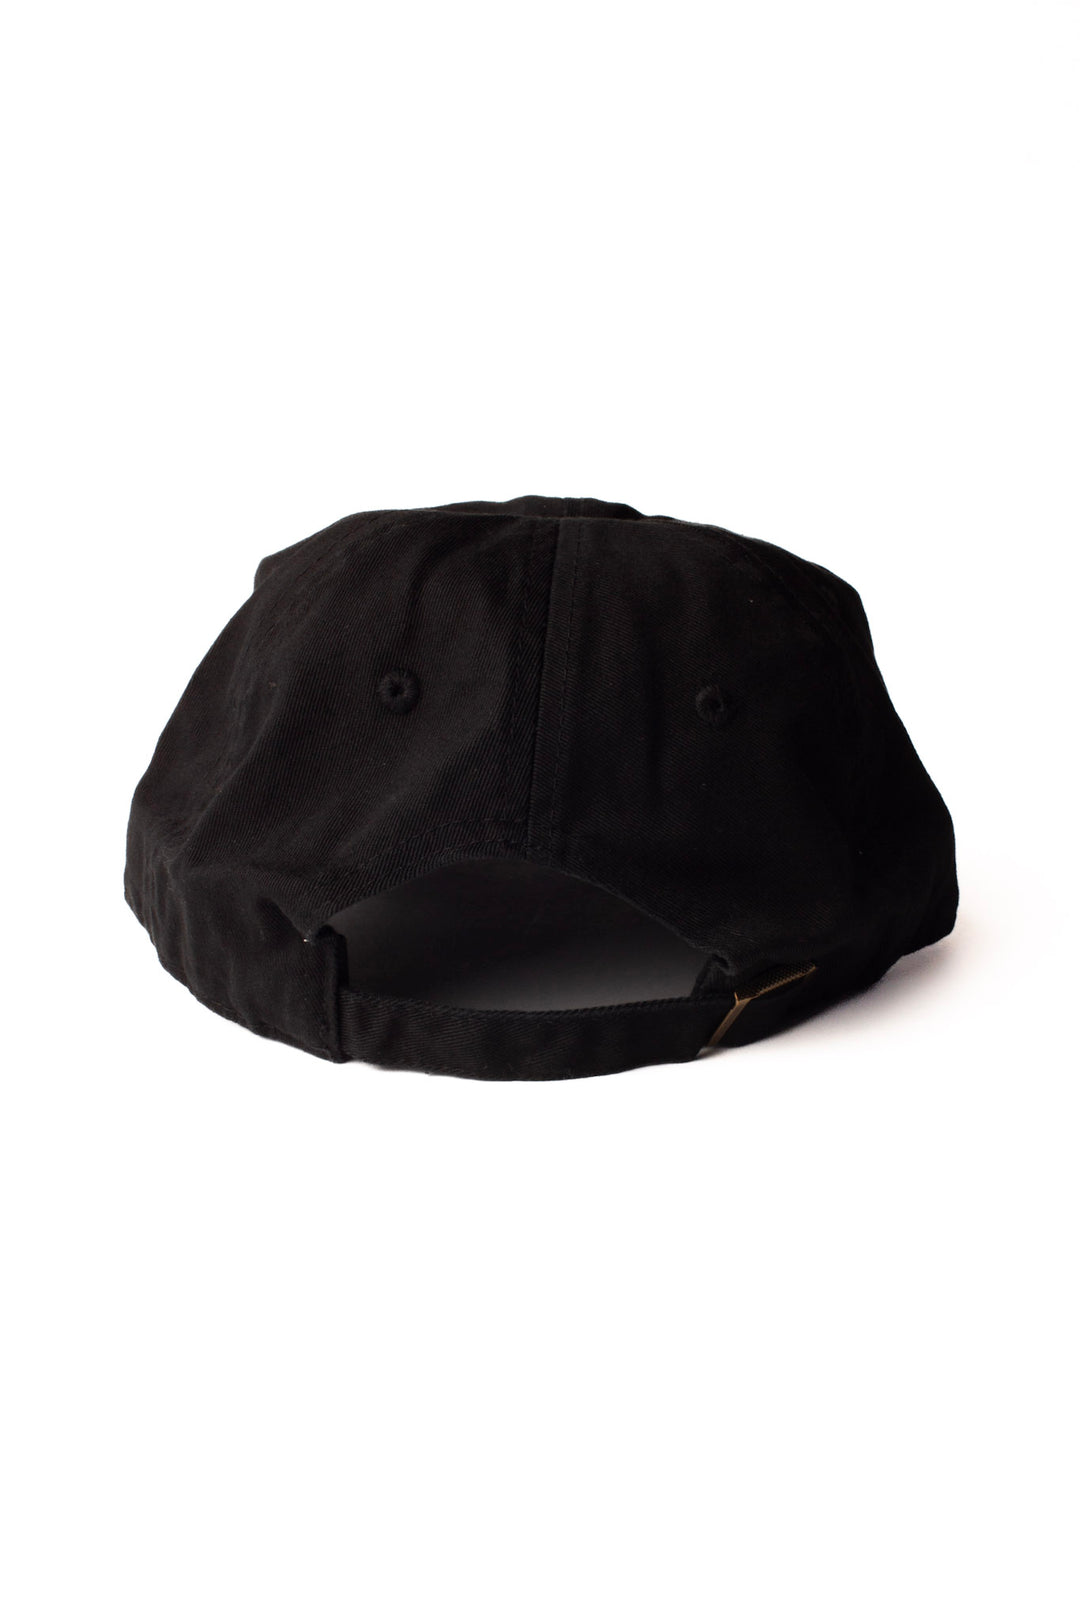 FINDLAY x SWEETS - Dad Hat - BLACK